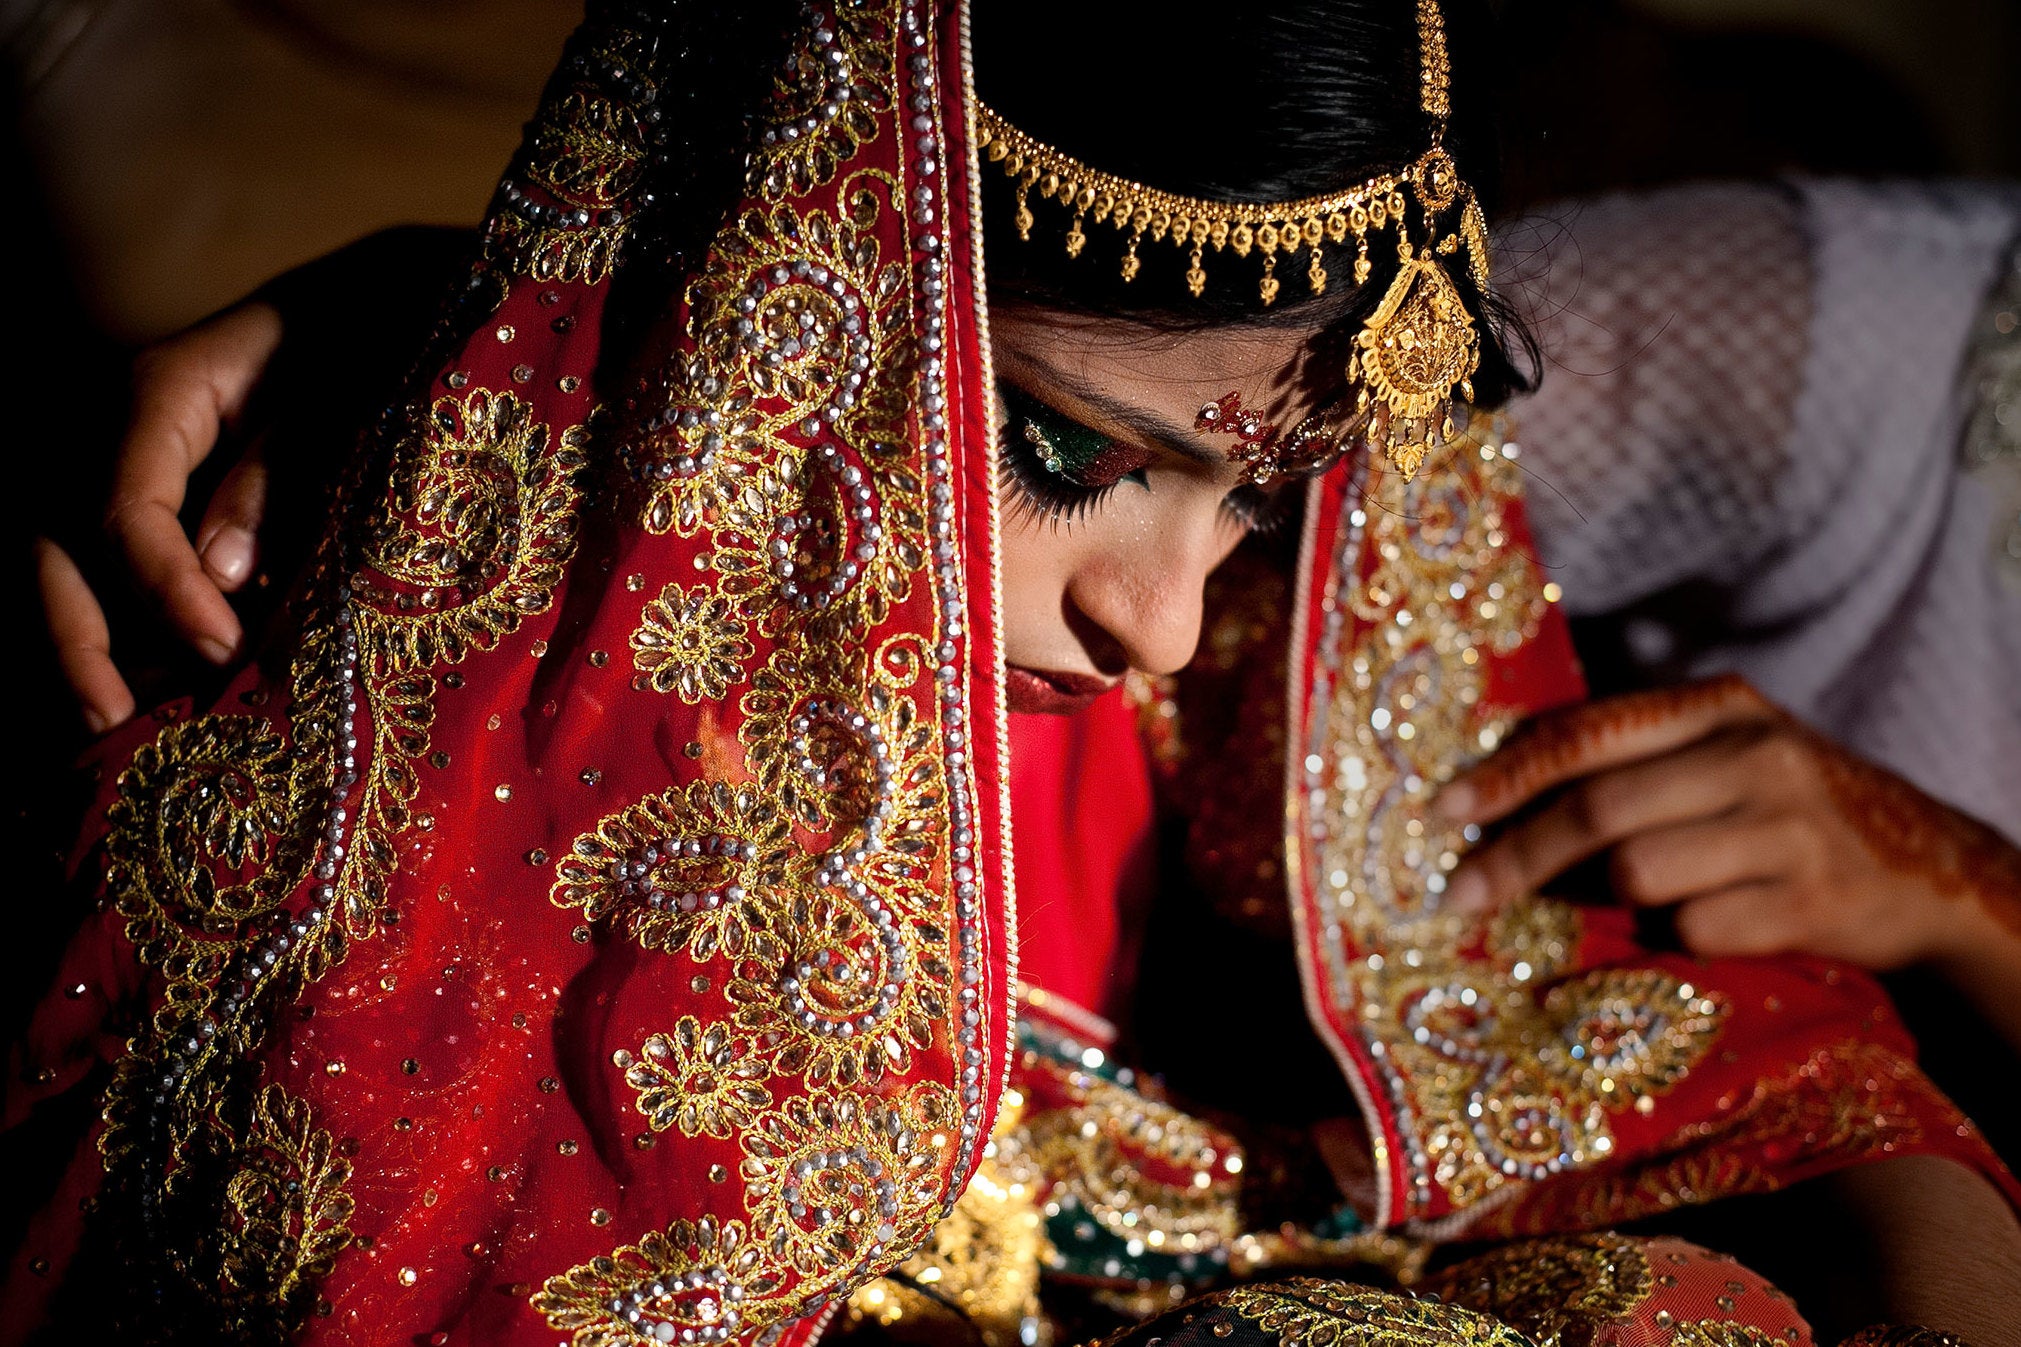 Bangladesh Teen Rape Sex - Bangladesh child marriage: New law will 'reduce minimum marital ...